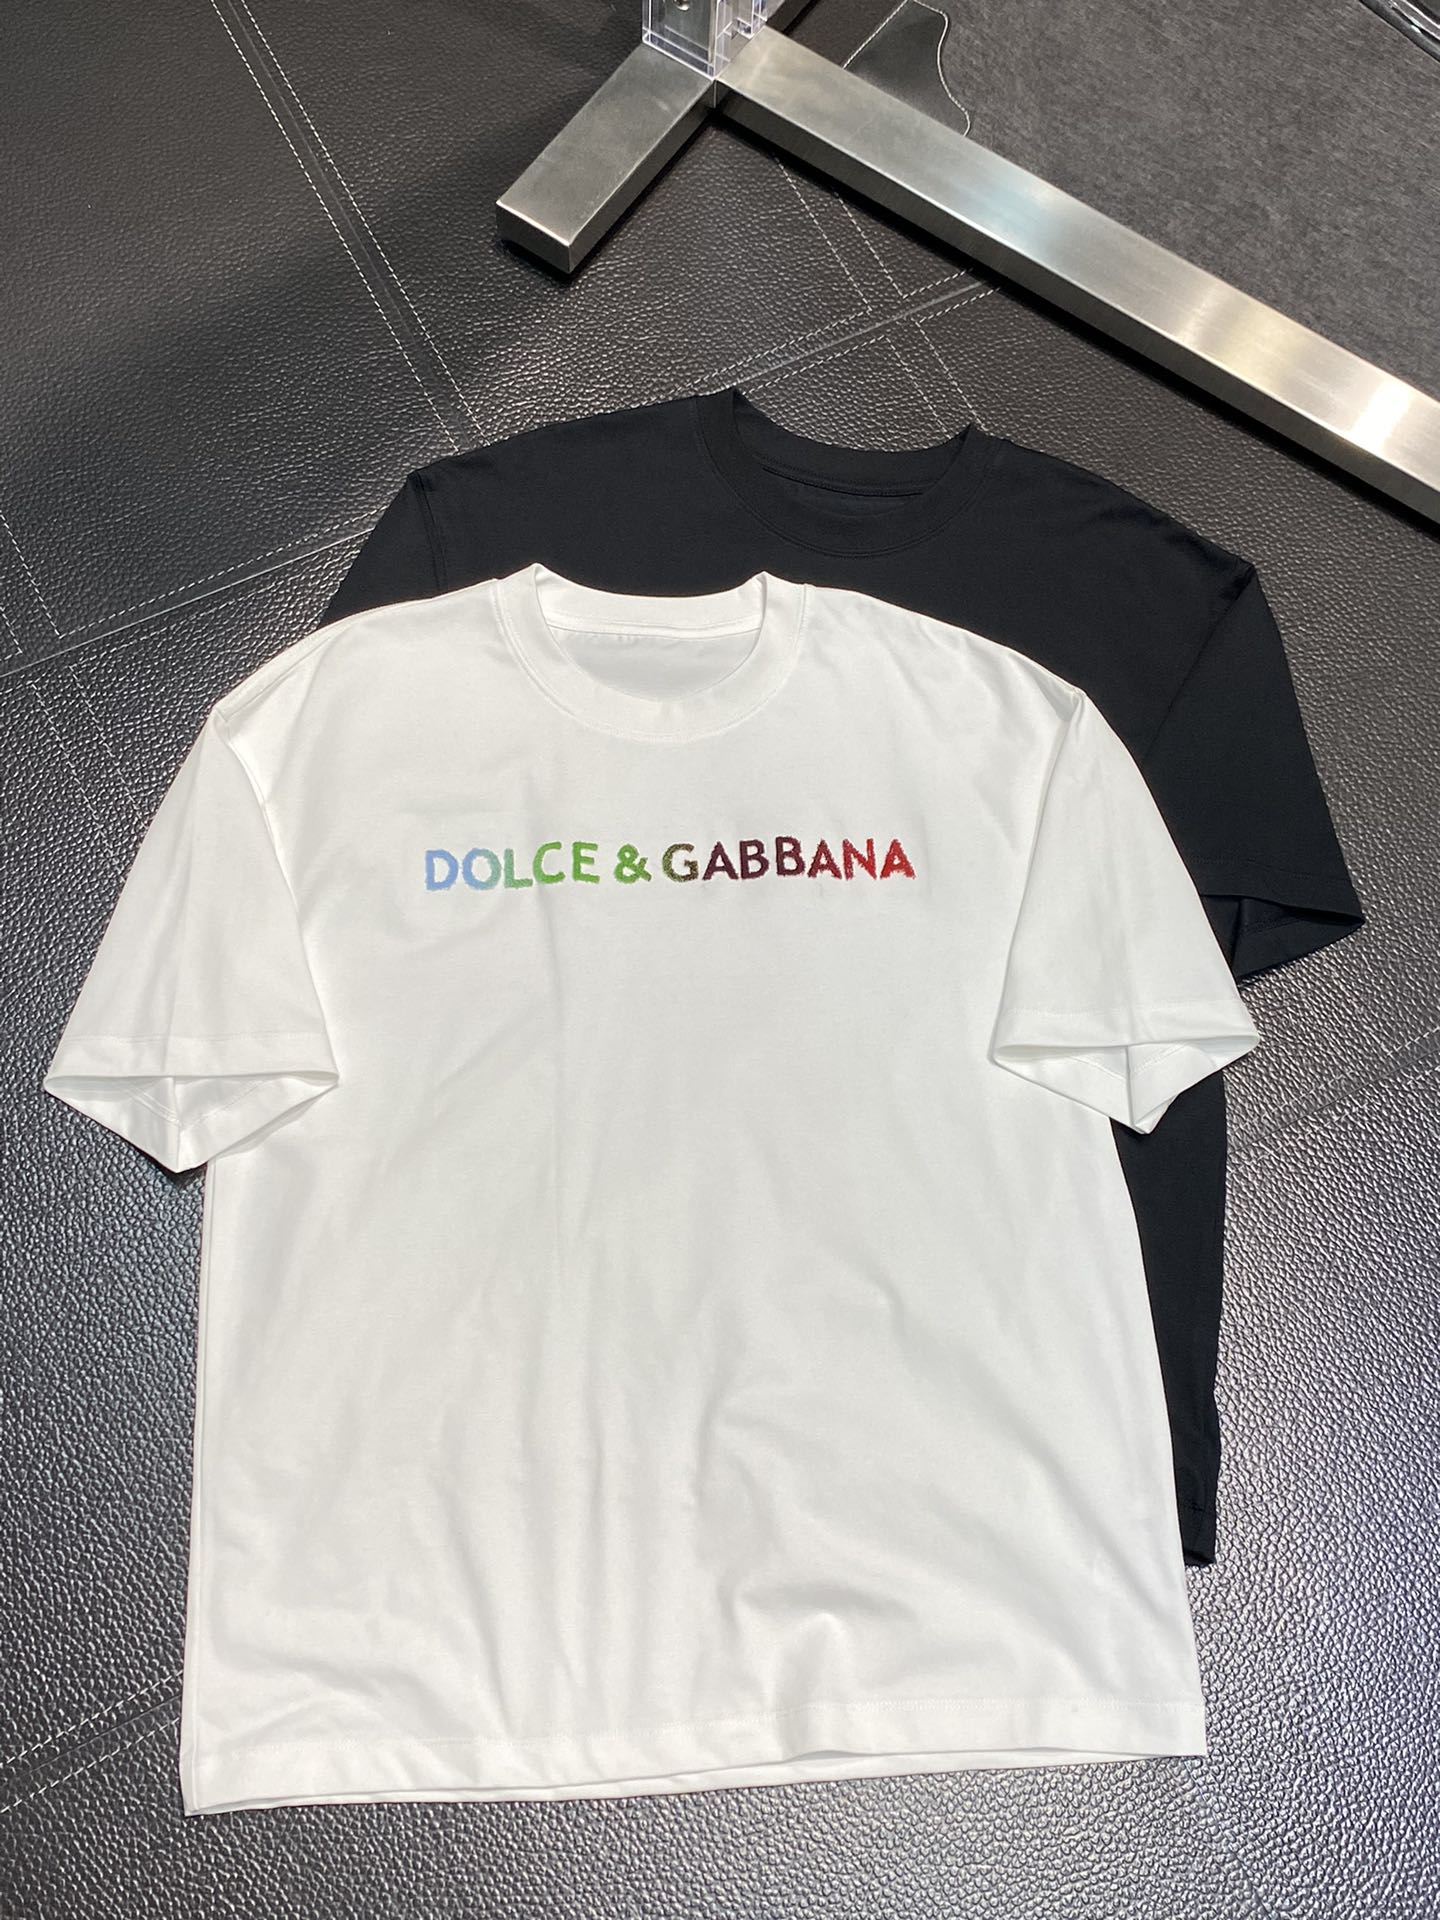 Dolce & Gabbana Clothing T-Shirt Men Fashion Short Sleeve